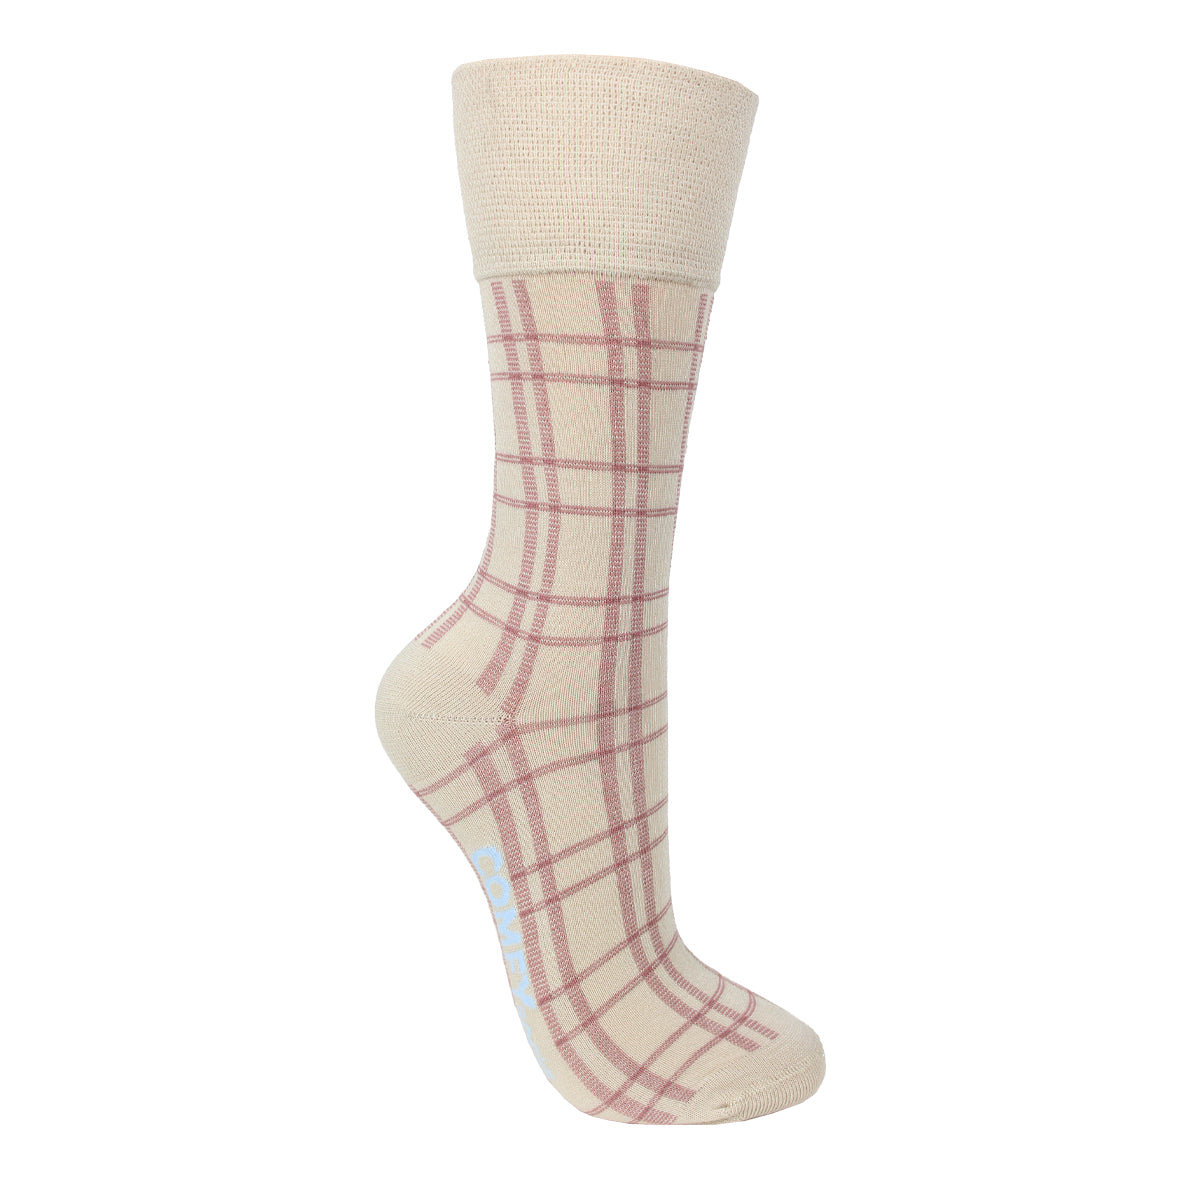 Comfy Socks - Calcetin Bamboo Escoses Largo 3/4